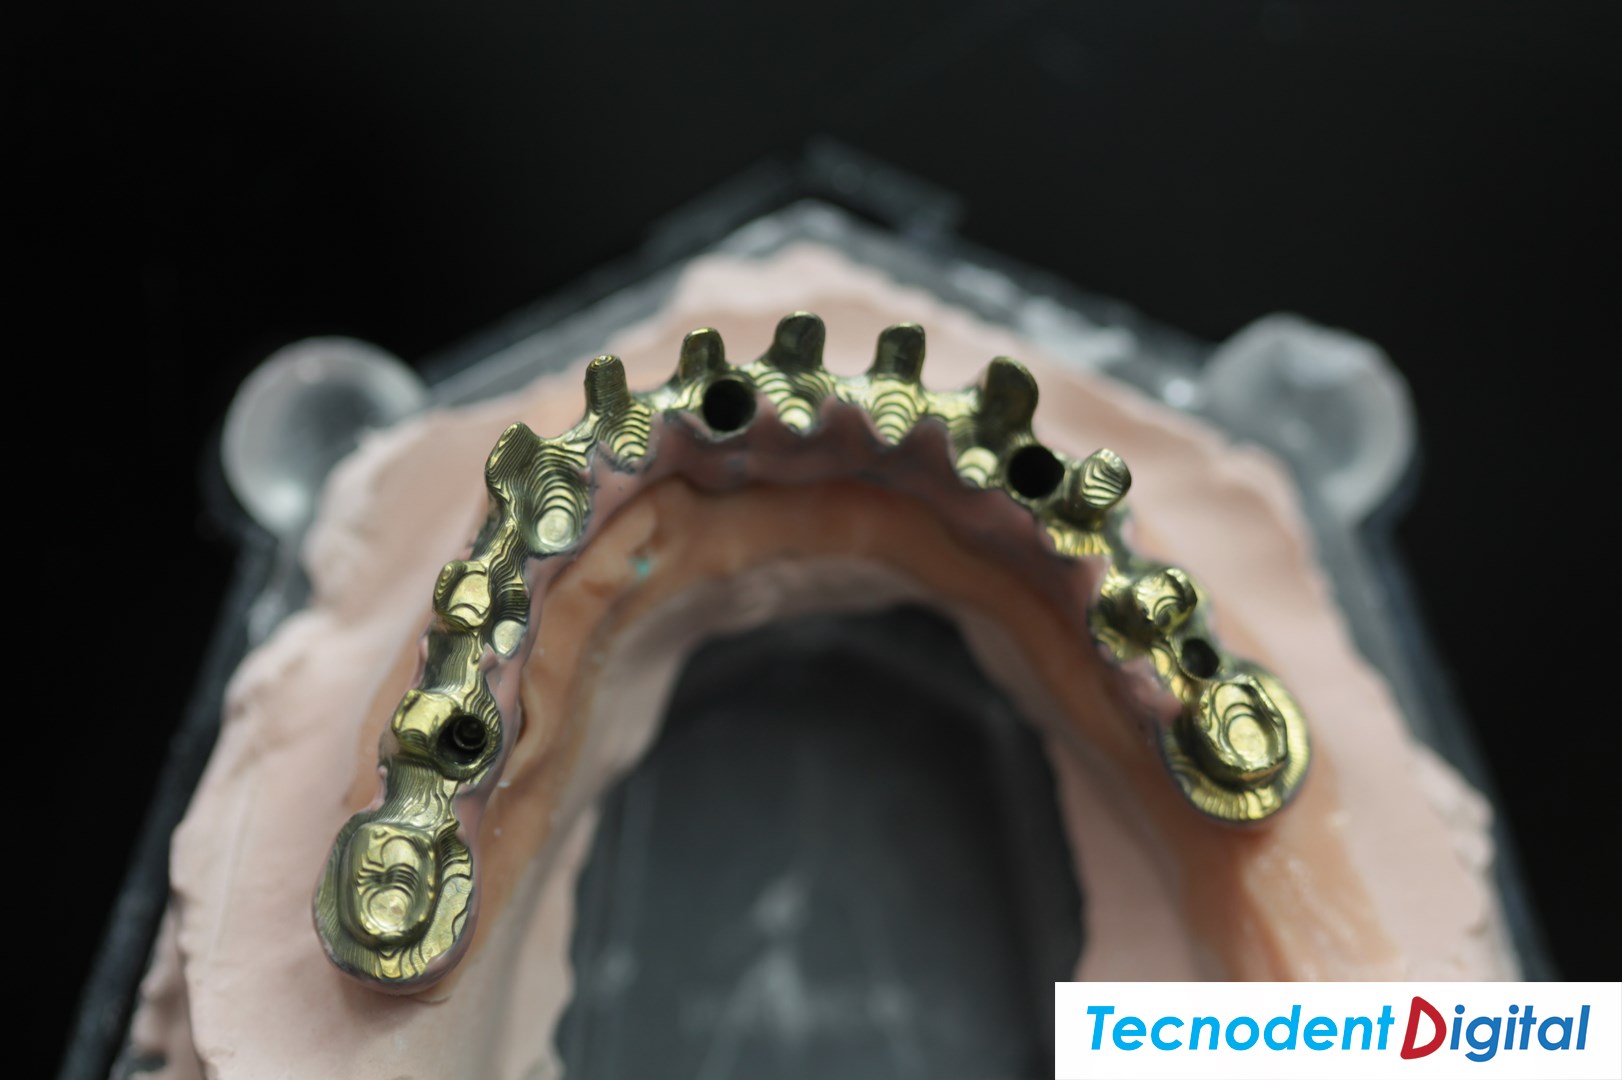 Estructura-implantes-titanio-anodizado-laboratorio-dental-Gandia-Centro-de-Fresado